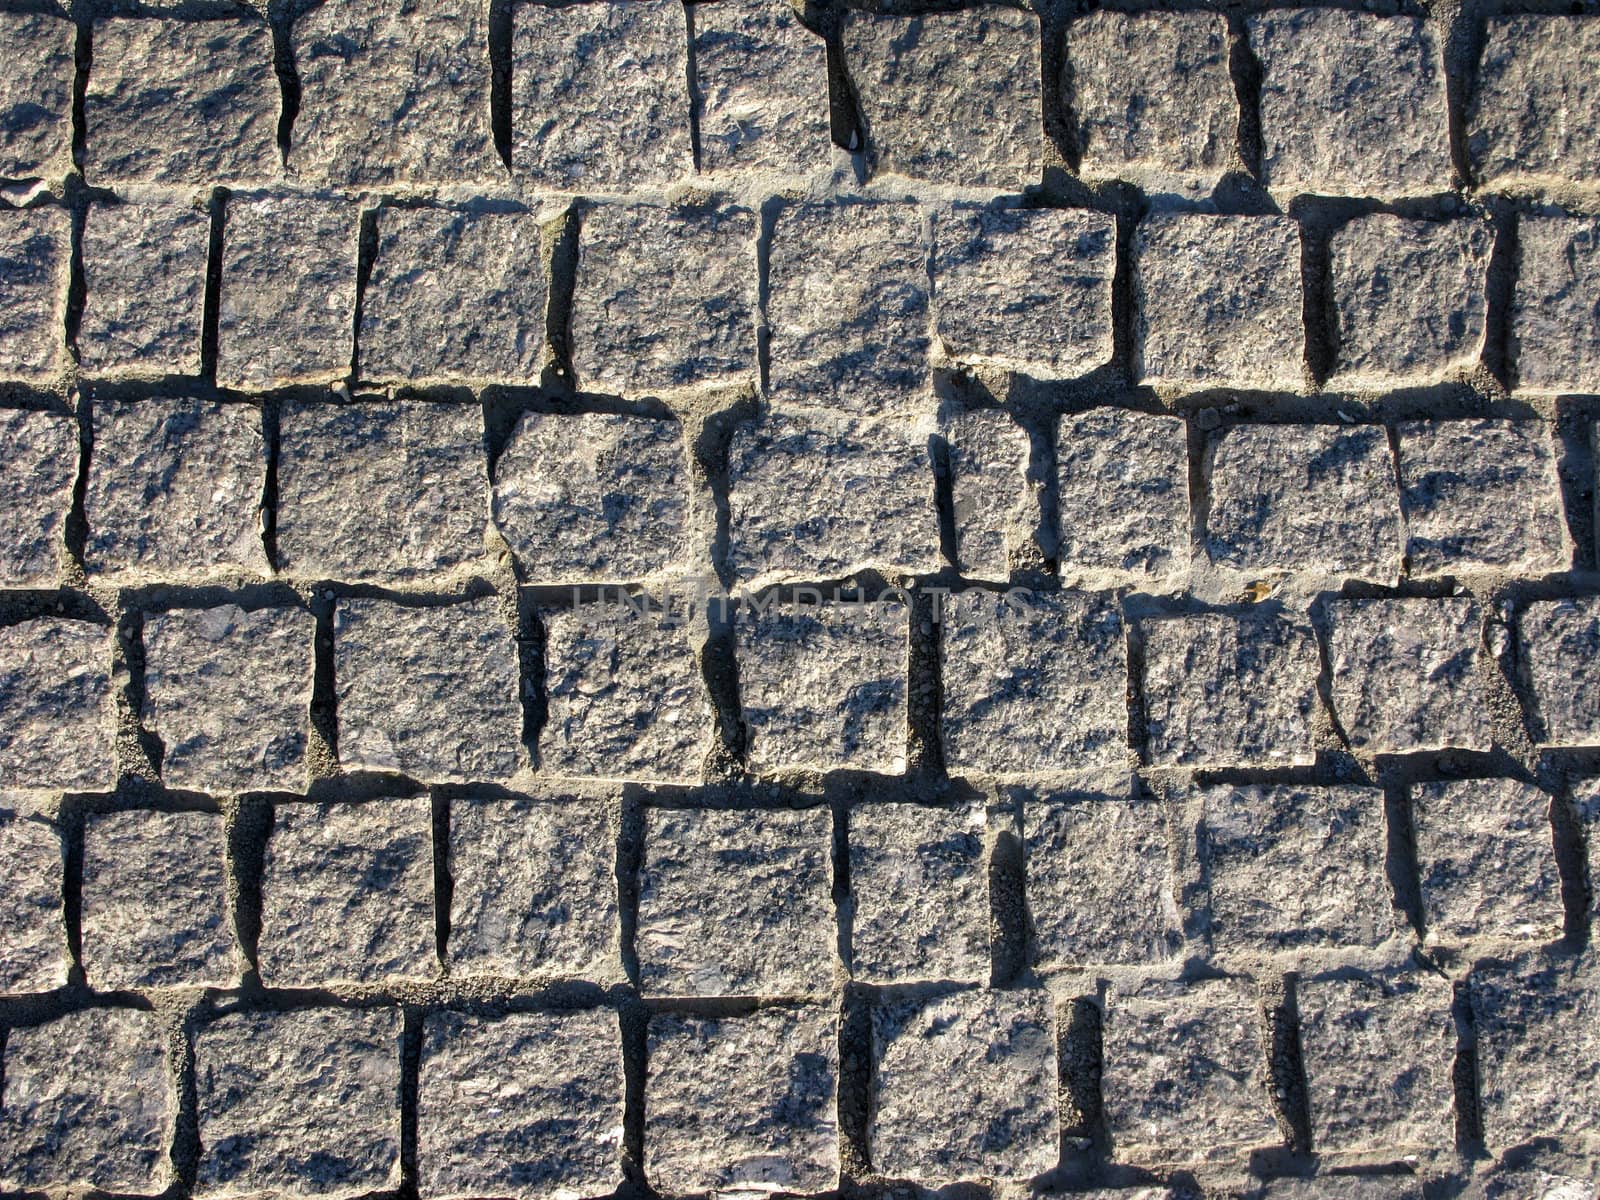 Granite pavement background by wander